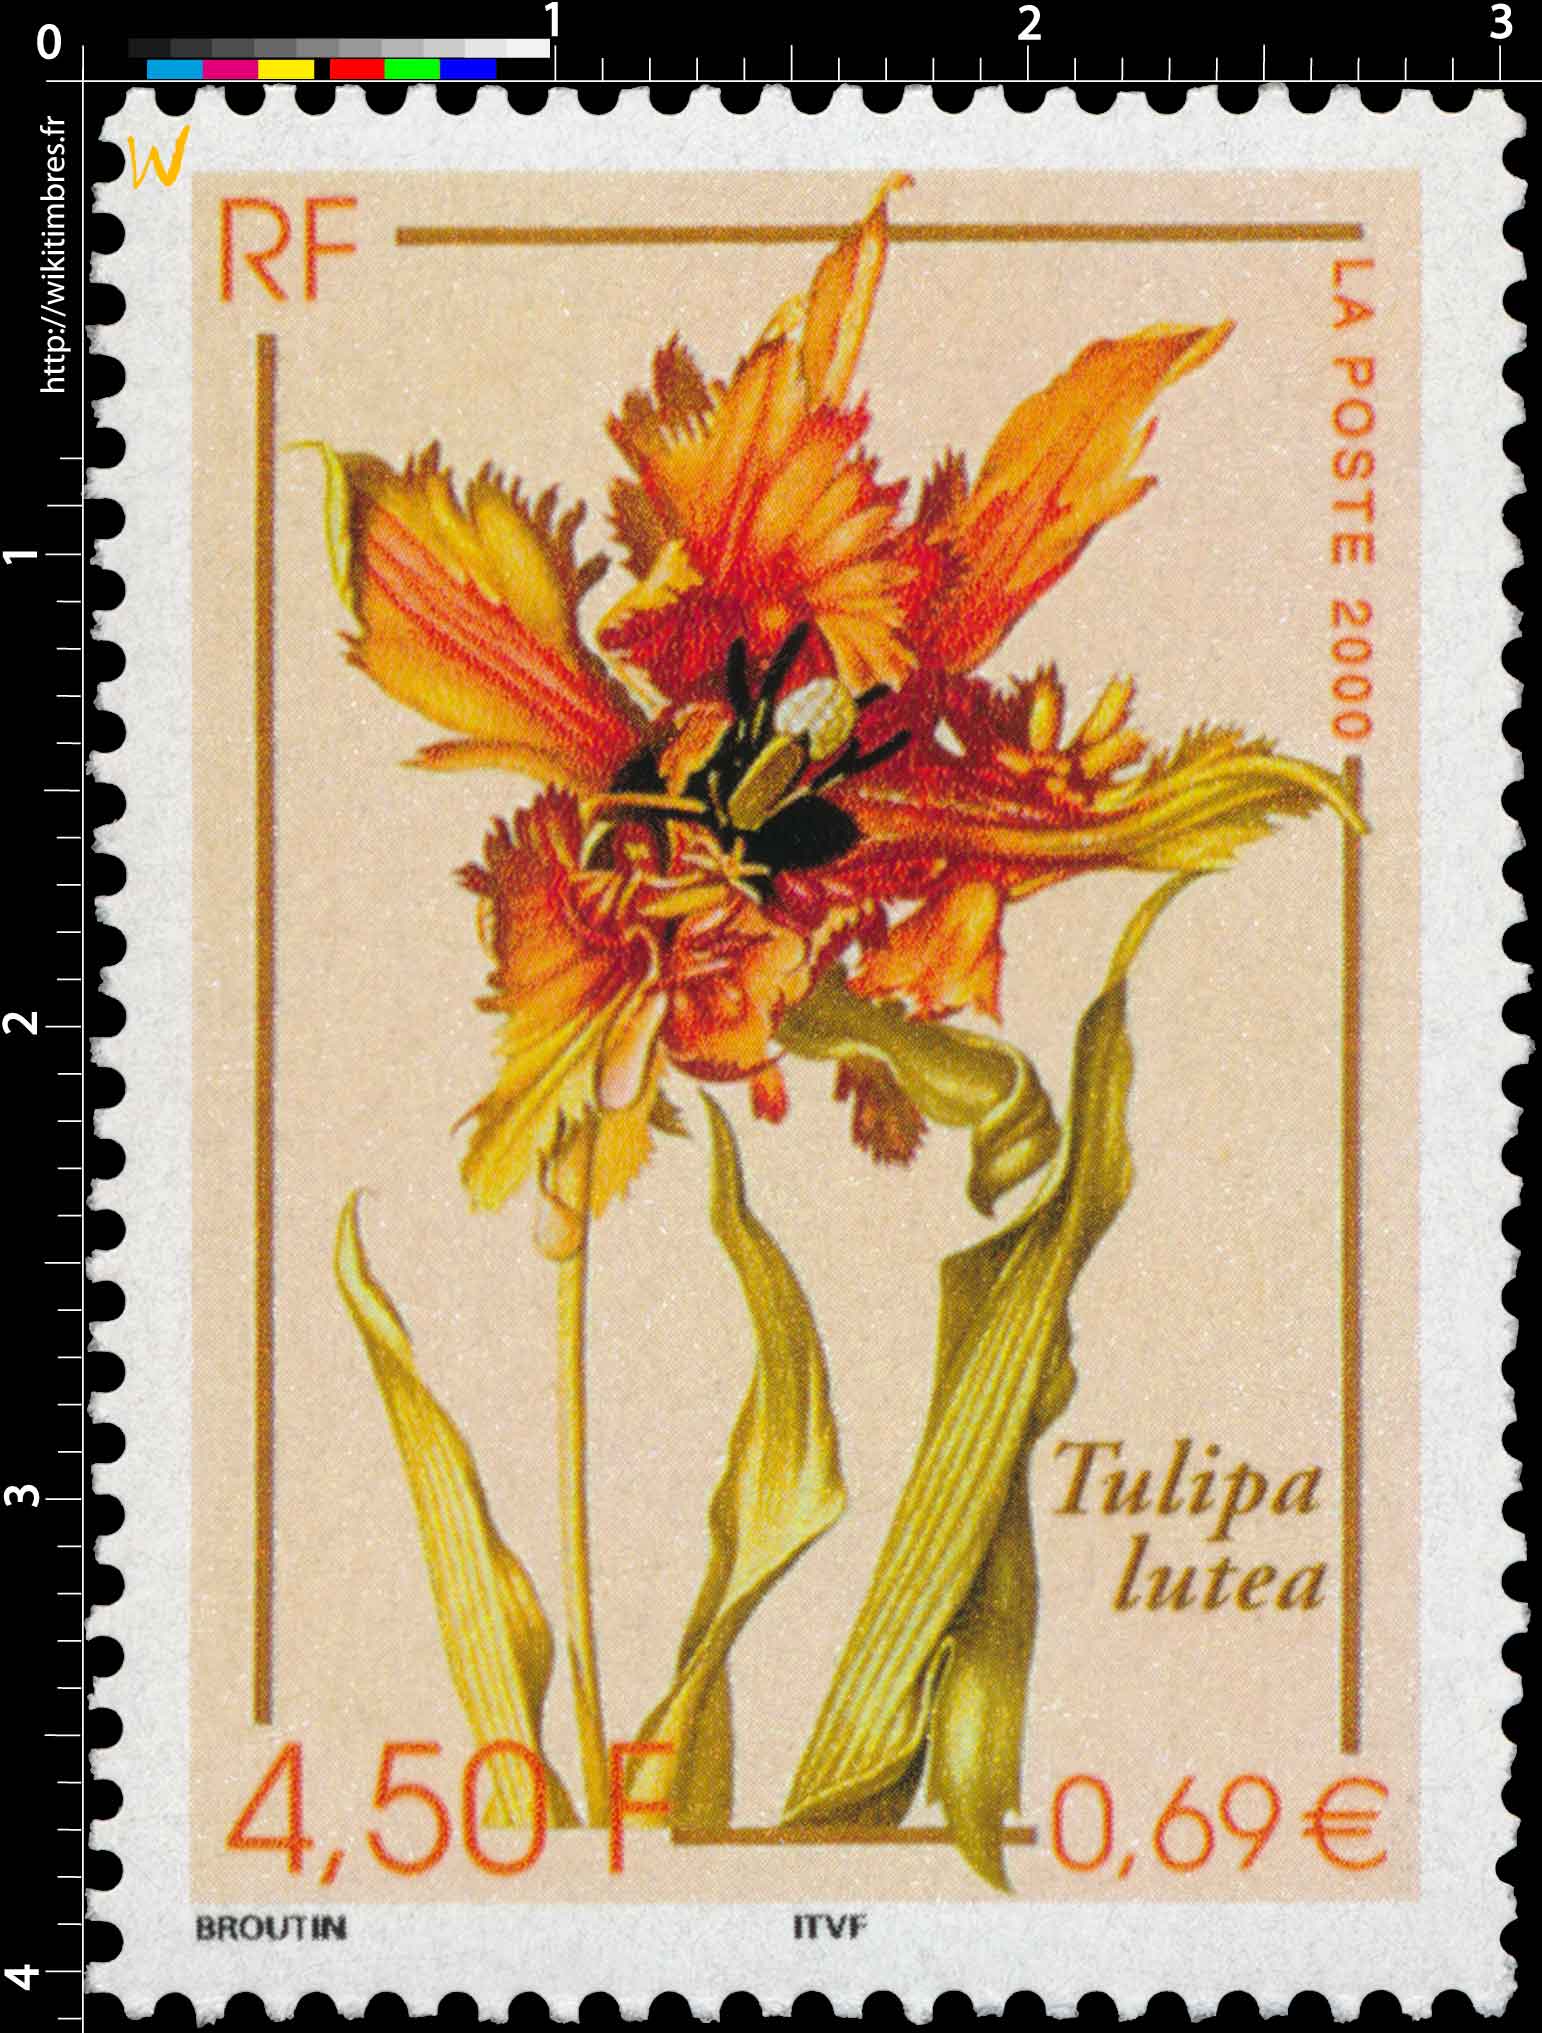 2000 Tulipa lutea